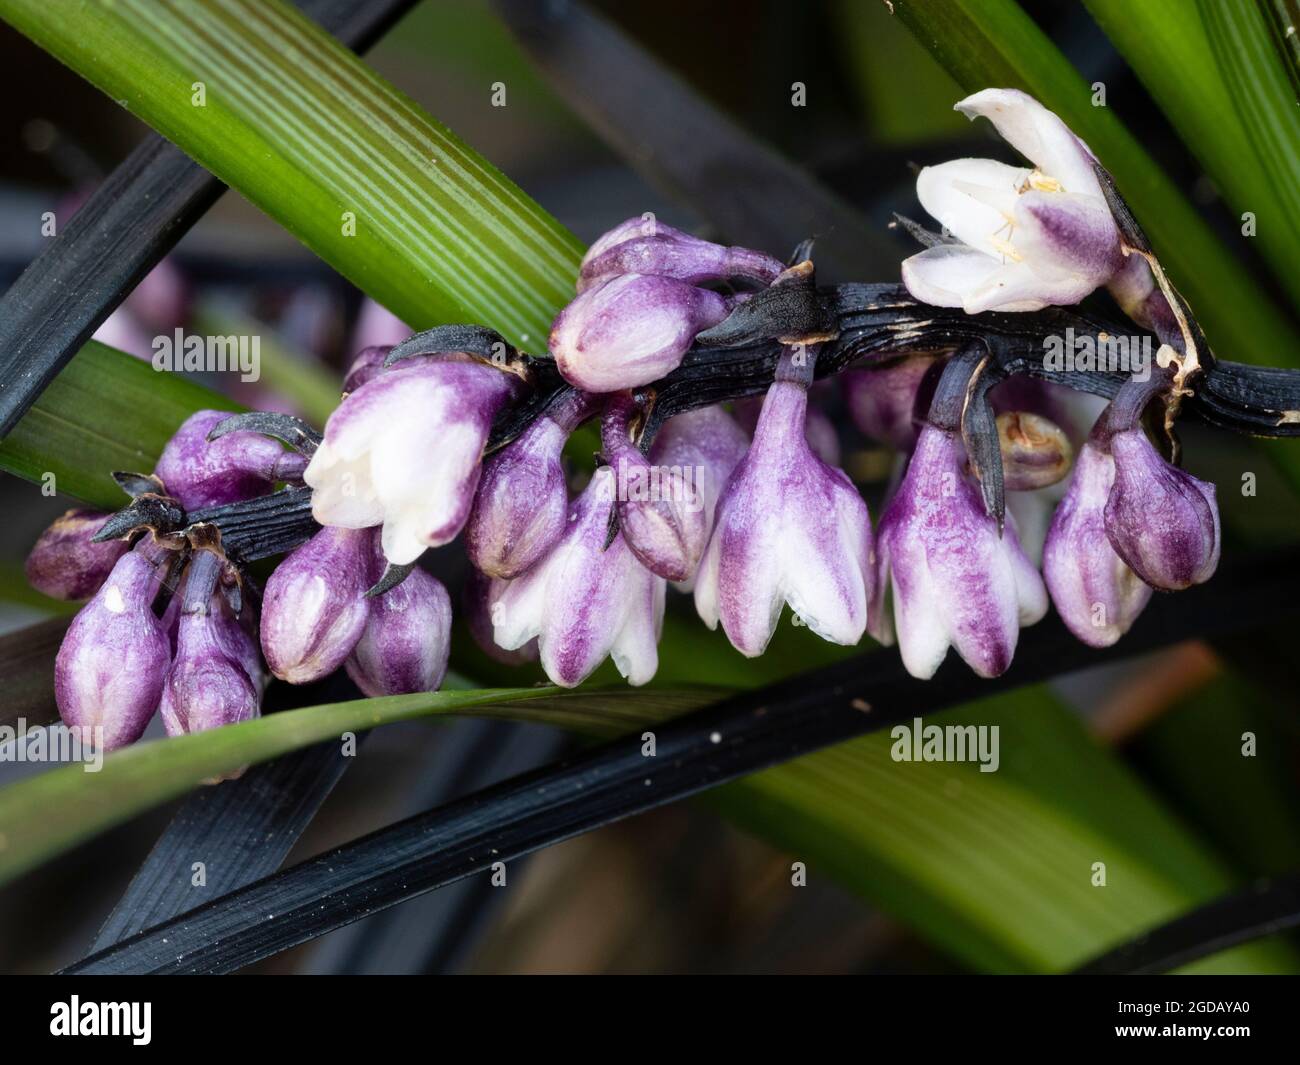 White and purple summer flowers of the hardy perennial black mondo grass, Ophiopogon planiscapus 'Nigrescens' Stock Photo